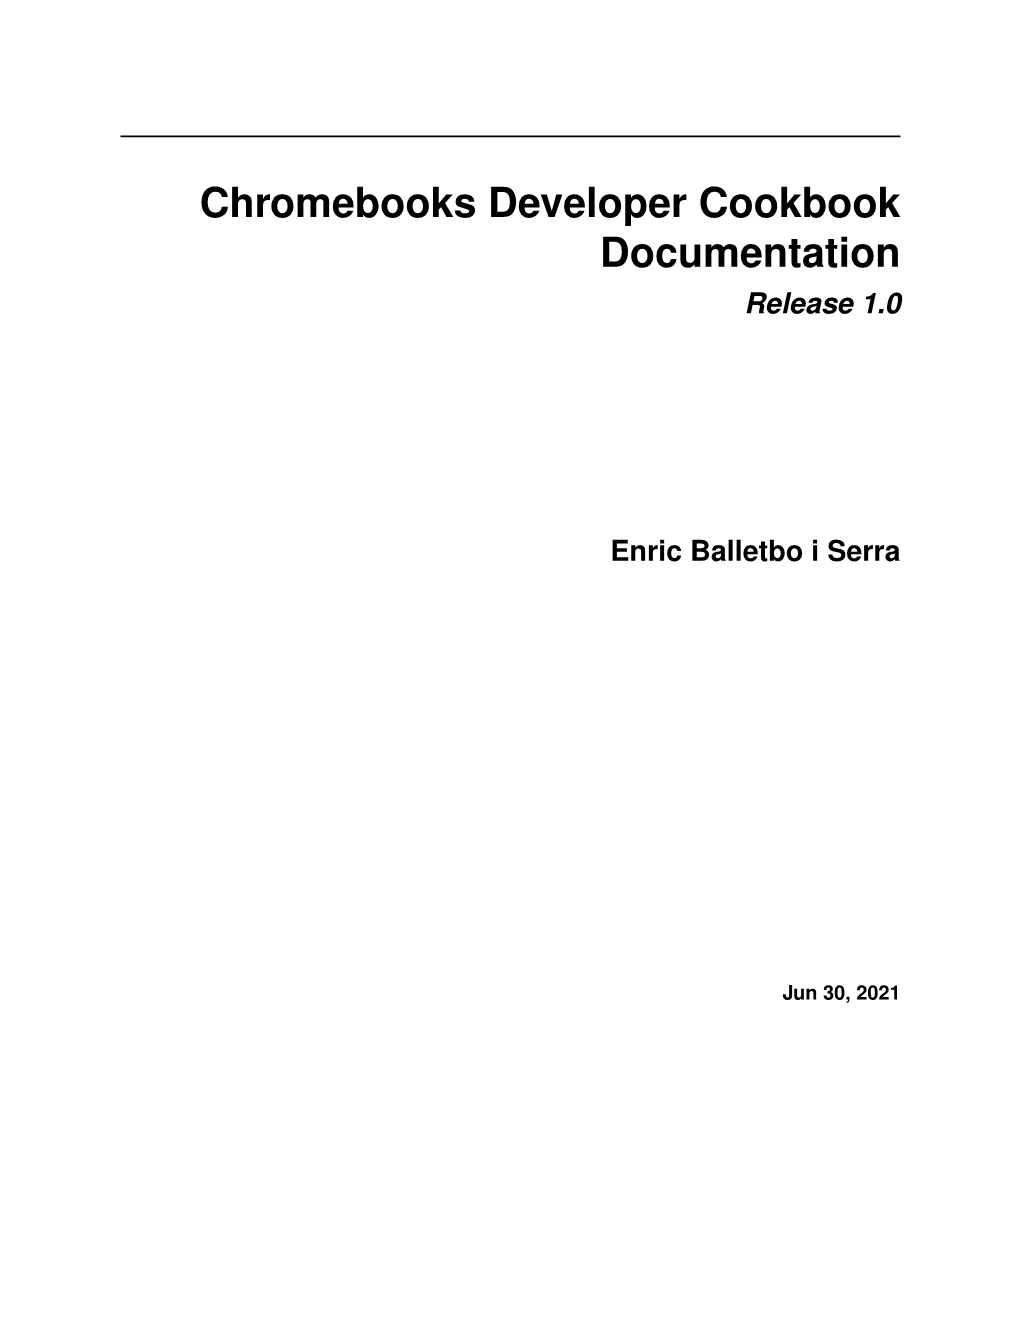 Chromebooks Developer Cookbook Documentation Release 1.0